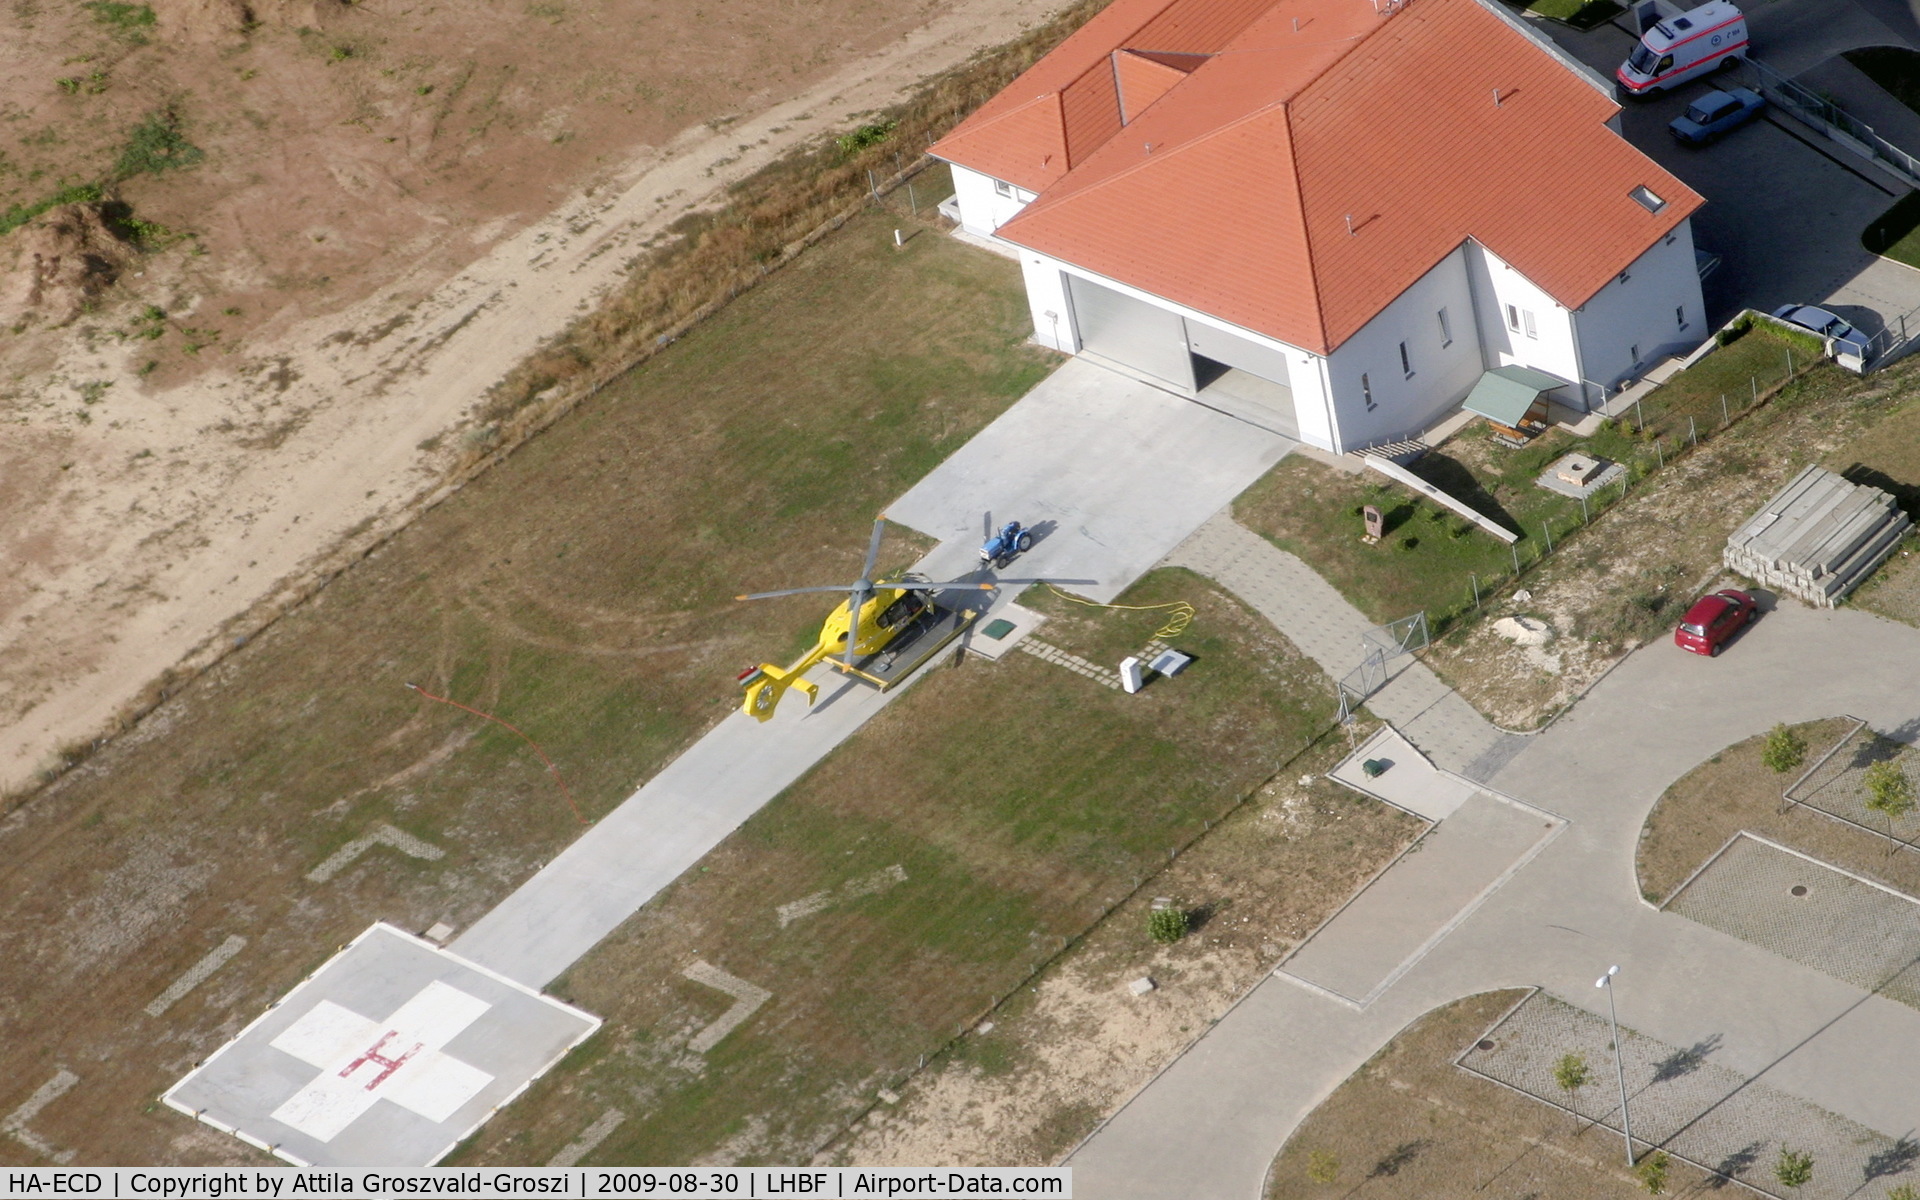 HA-ECD, 2004 Eurocopter EC-135T-2 C/N 0325, Balatonfüred aerial ambulance base. LHBF